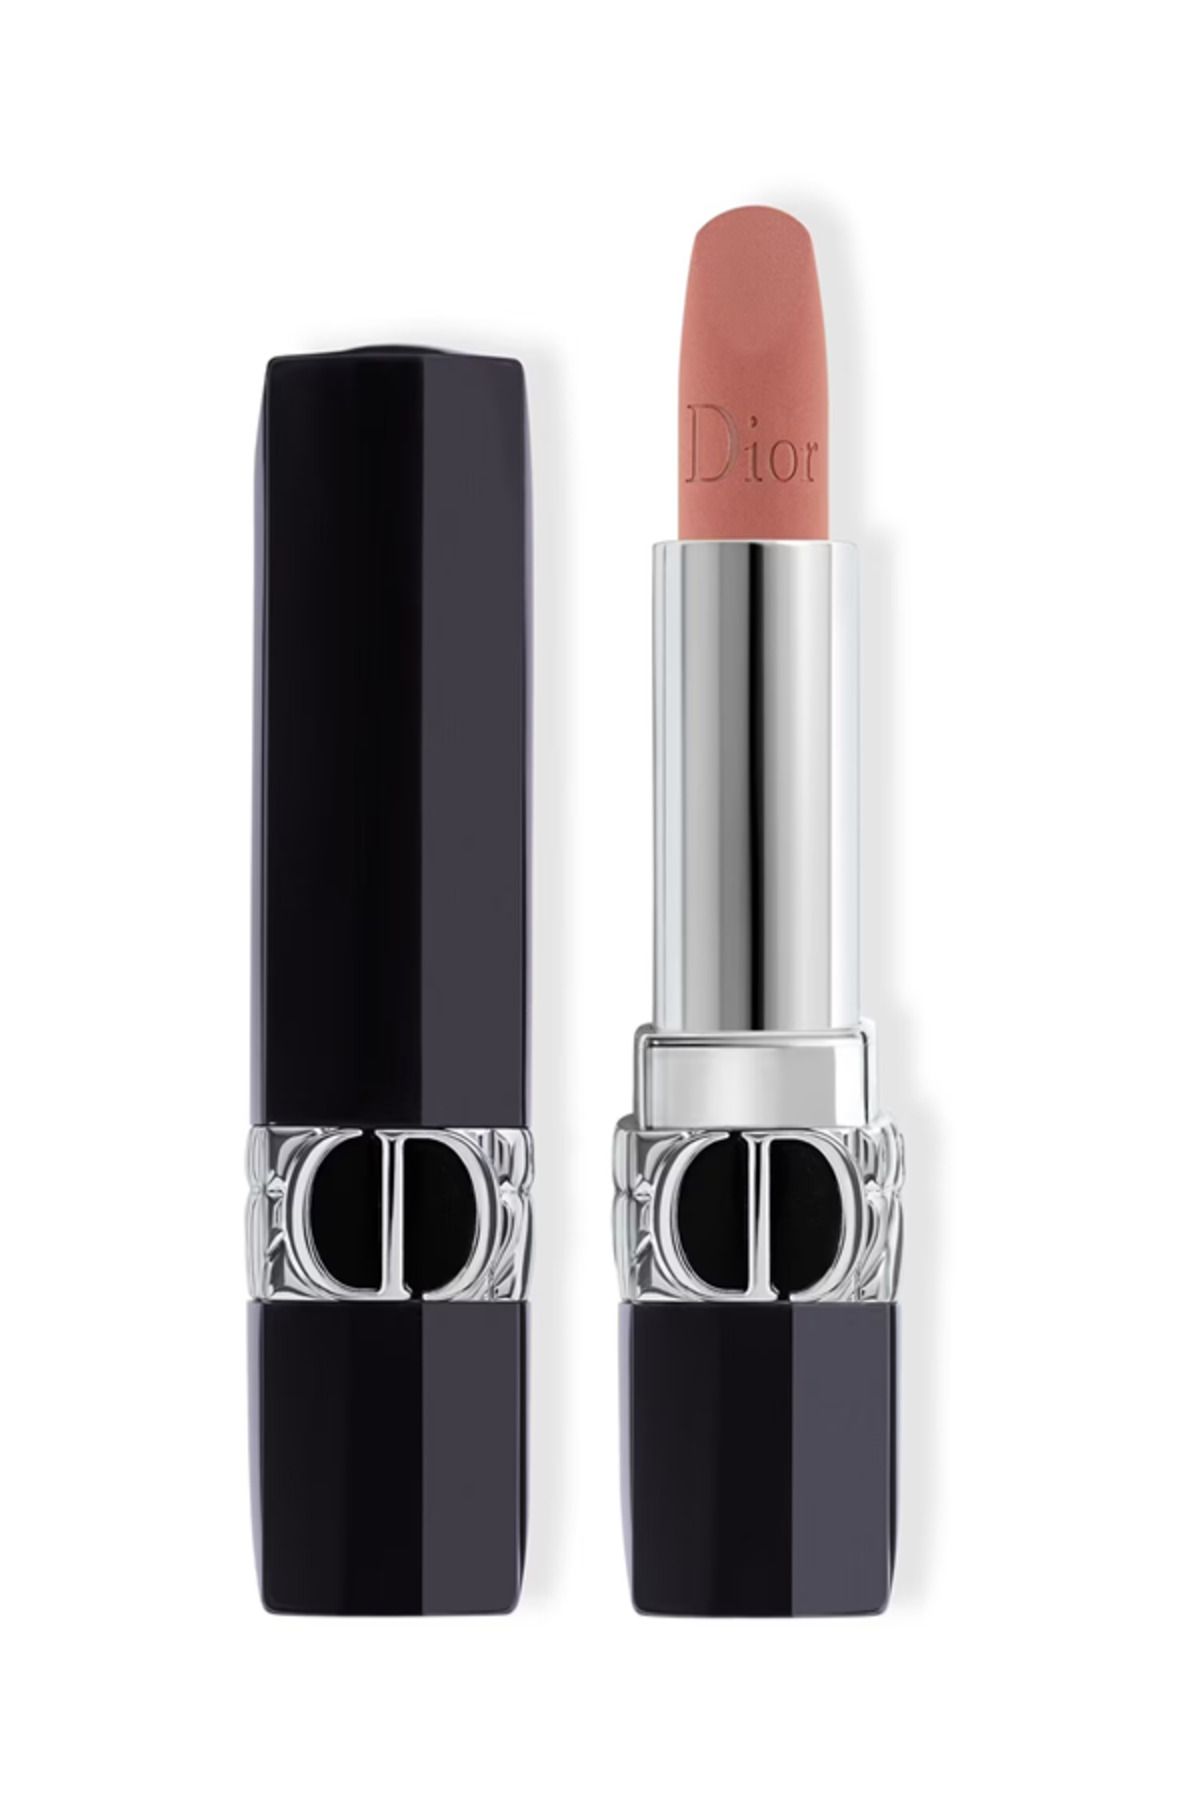 Dior Rouge Dior Floral Care Lip Balm - Dudak Balmı